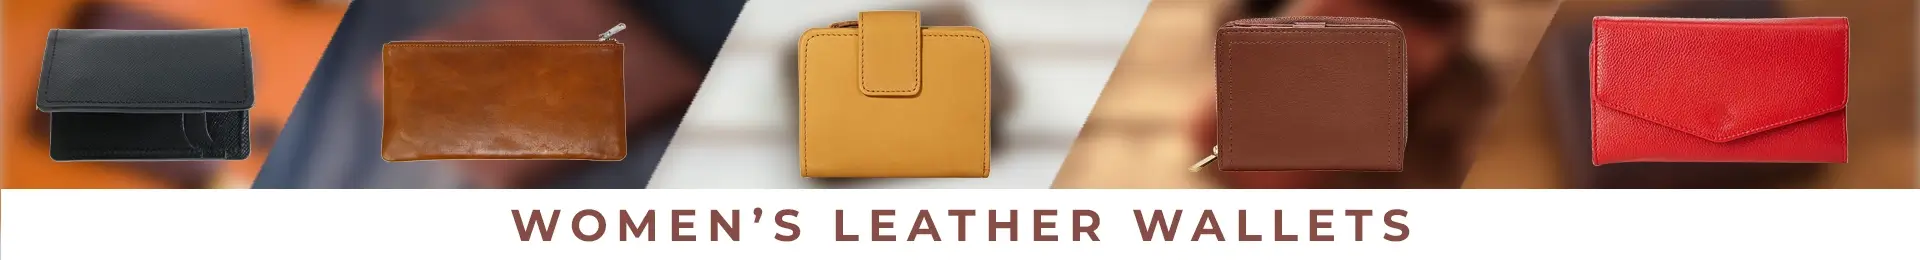 women leather wallets, ladies leather wallets, genuine leather wallet womens, small leather wallet womens